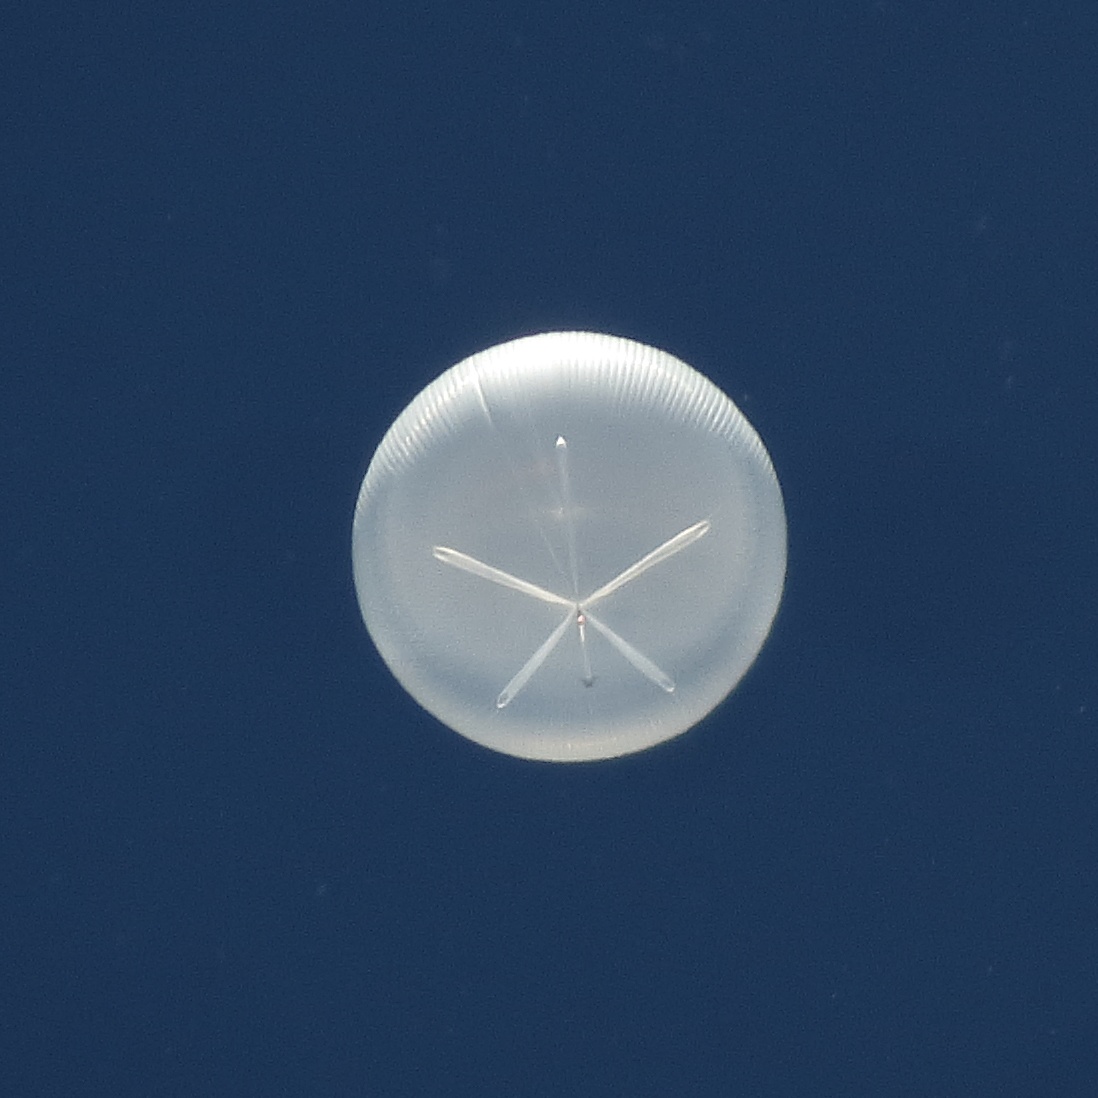 Fantastic picture of PMC-Turbo balloon taken by Mats Erikson near Kiruna, Sweden